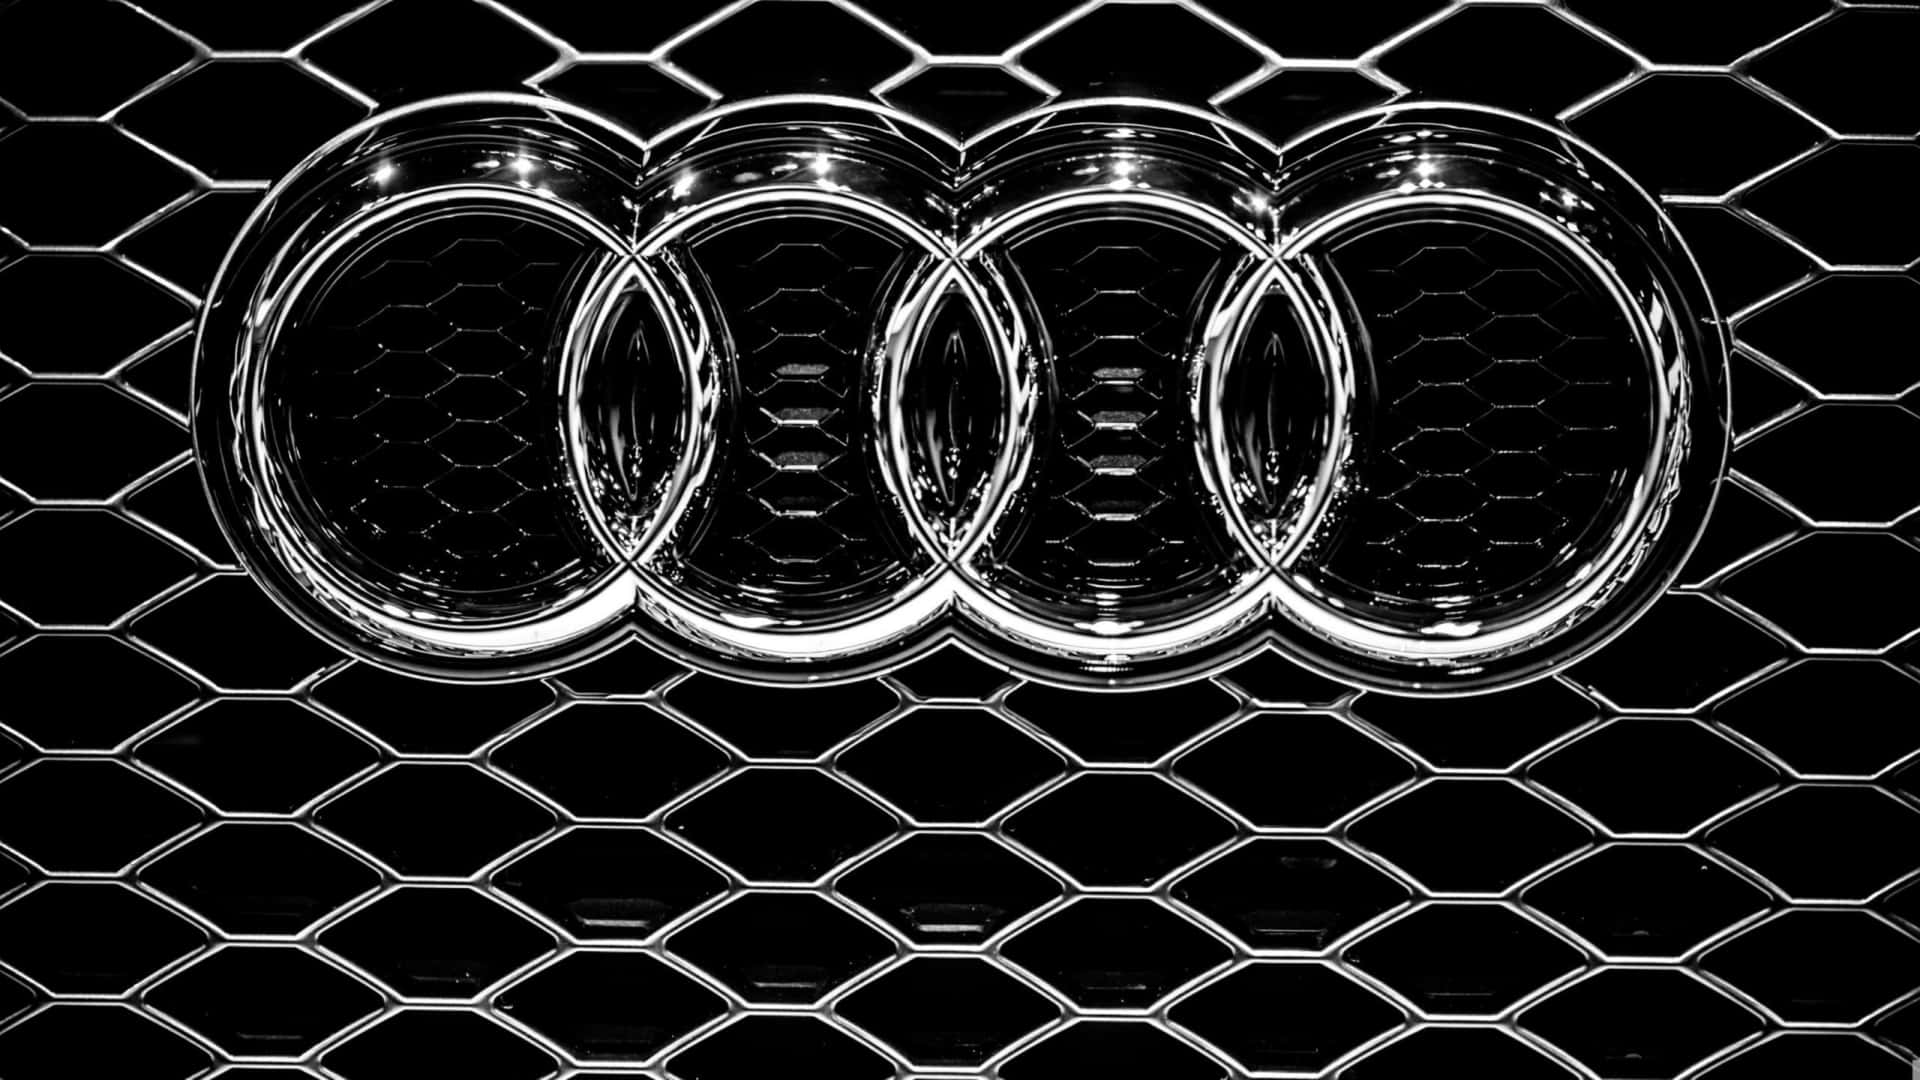 Audi3840 X 2160 Bakgrundsbild